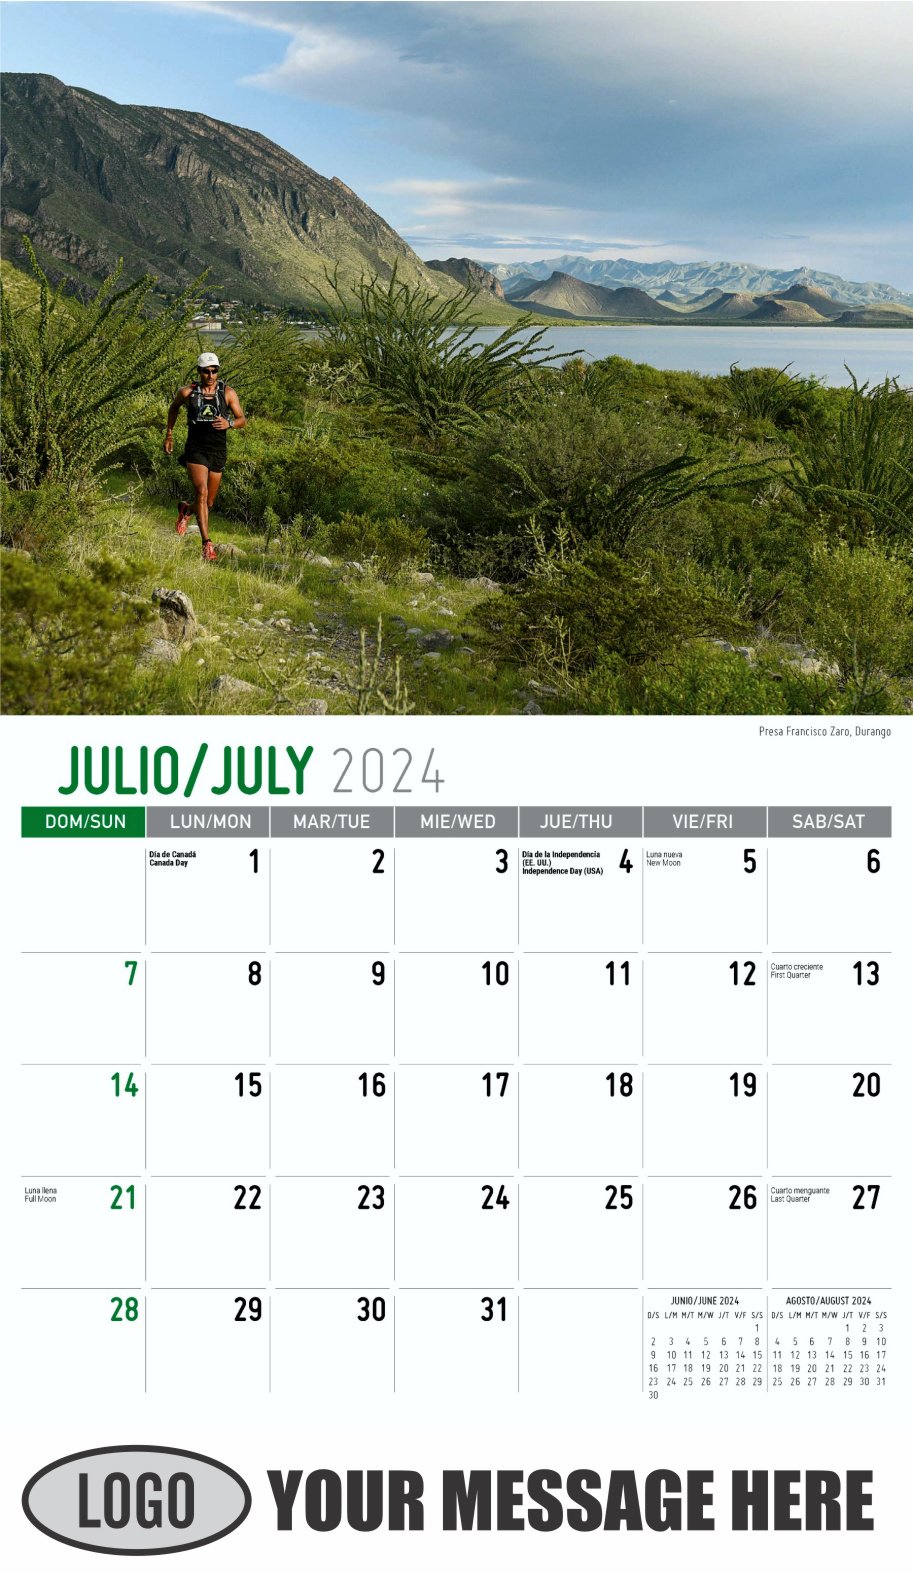 Scenes of Mexico 2024 Bilingual Business Promo Calendar - July